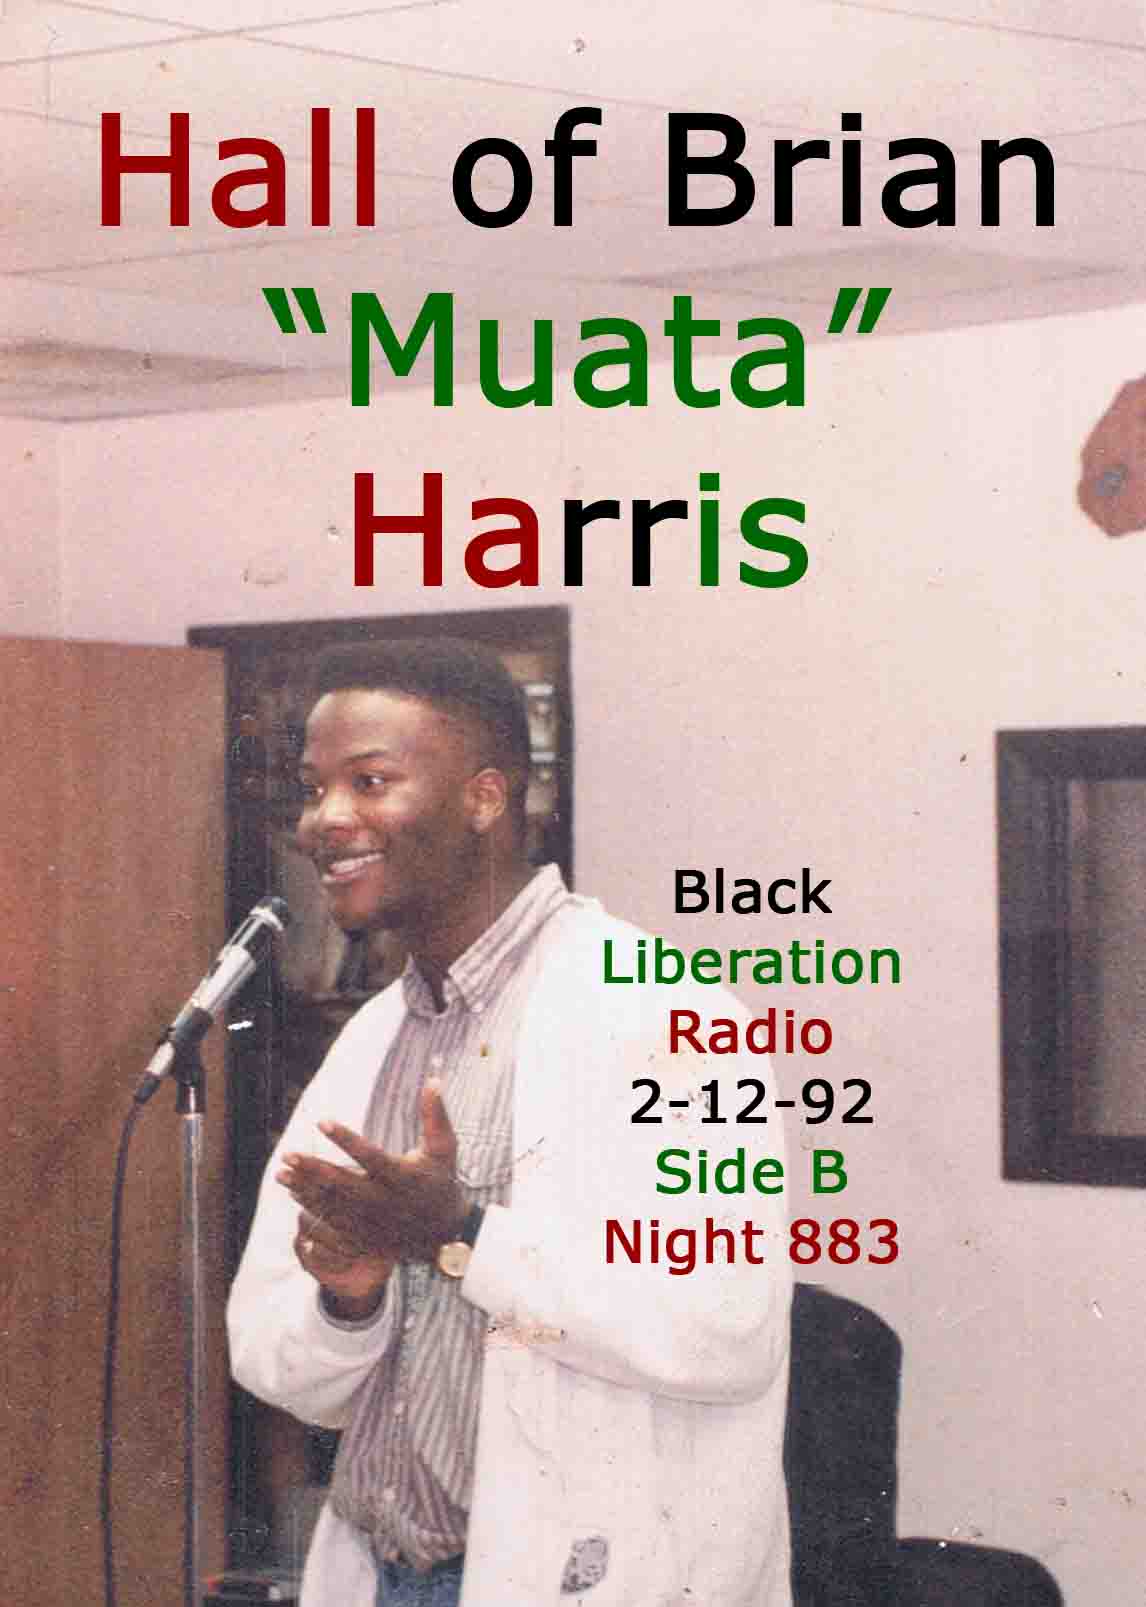 Black Liberation Radio - 2-12-92 side B